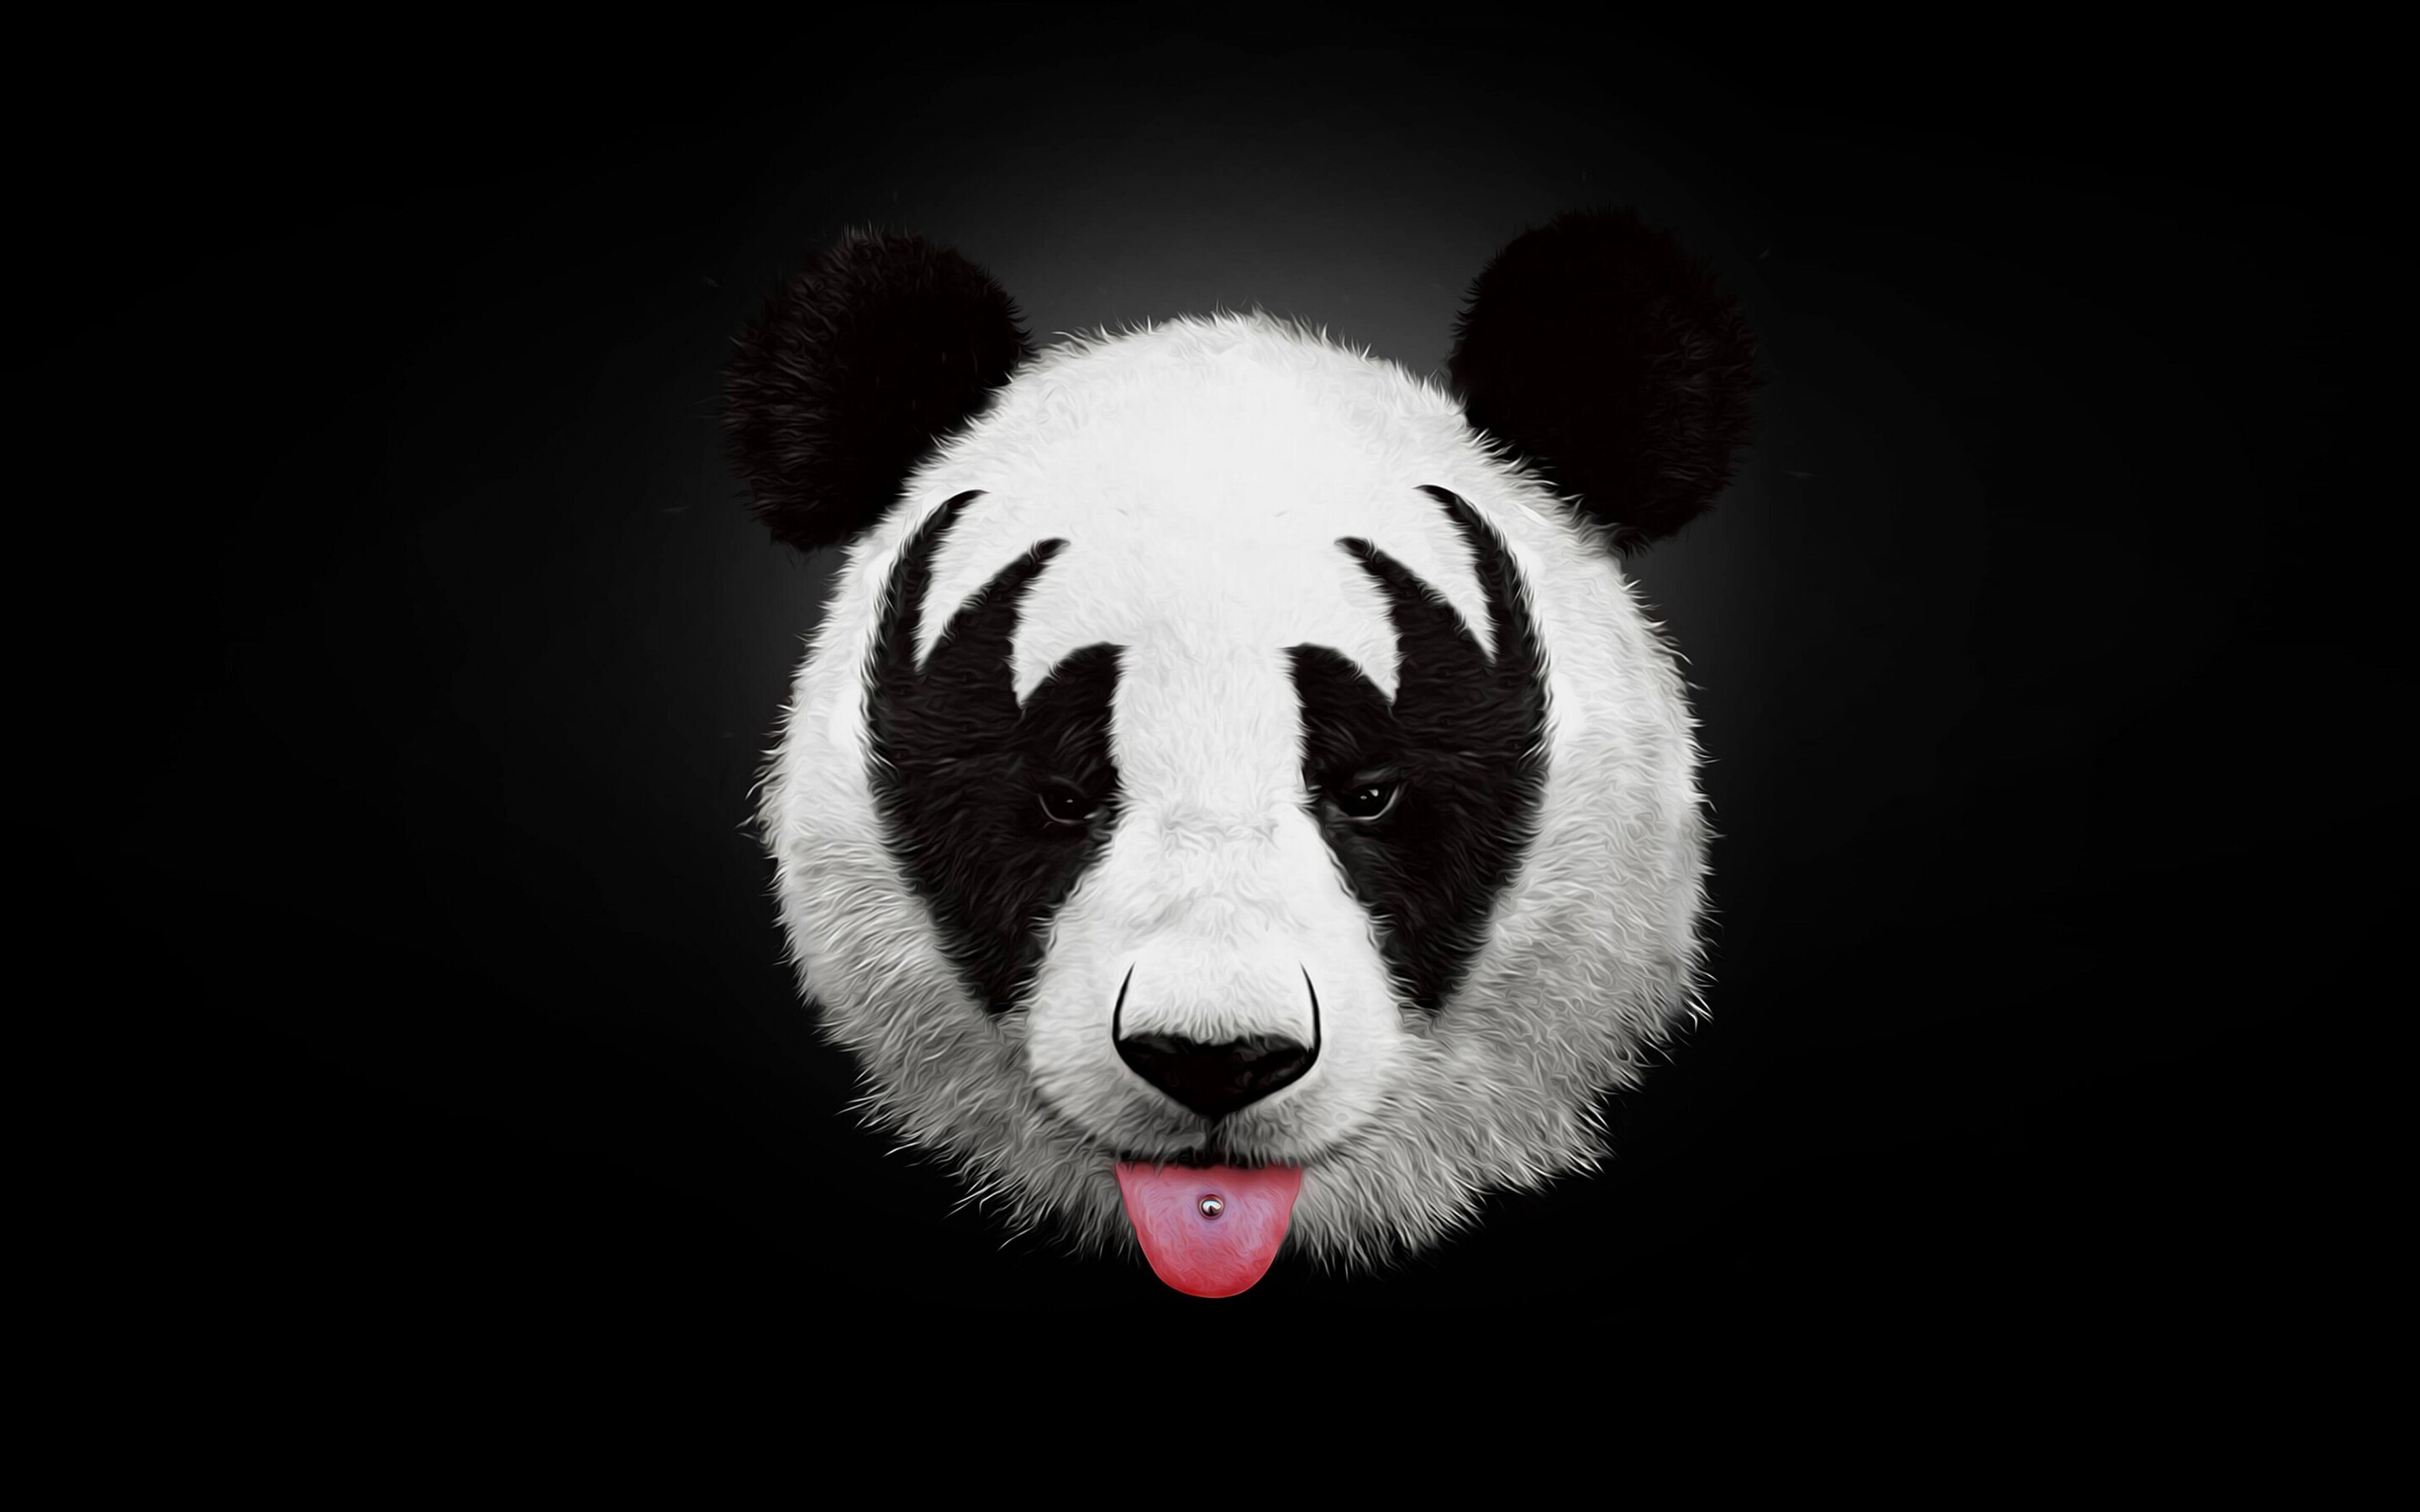 Panda 4k Artwork Macbook Pro Retina HD 4k Wallpaper, Image, Background, Photo and Picture